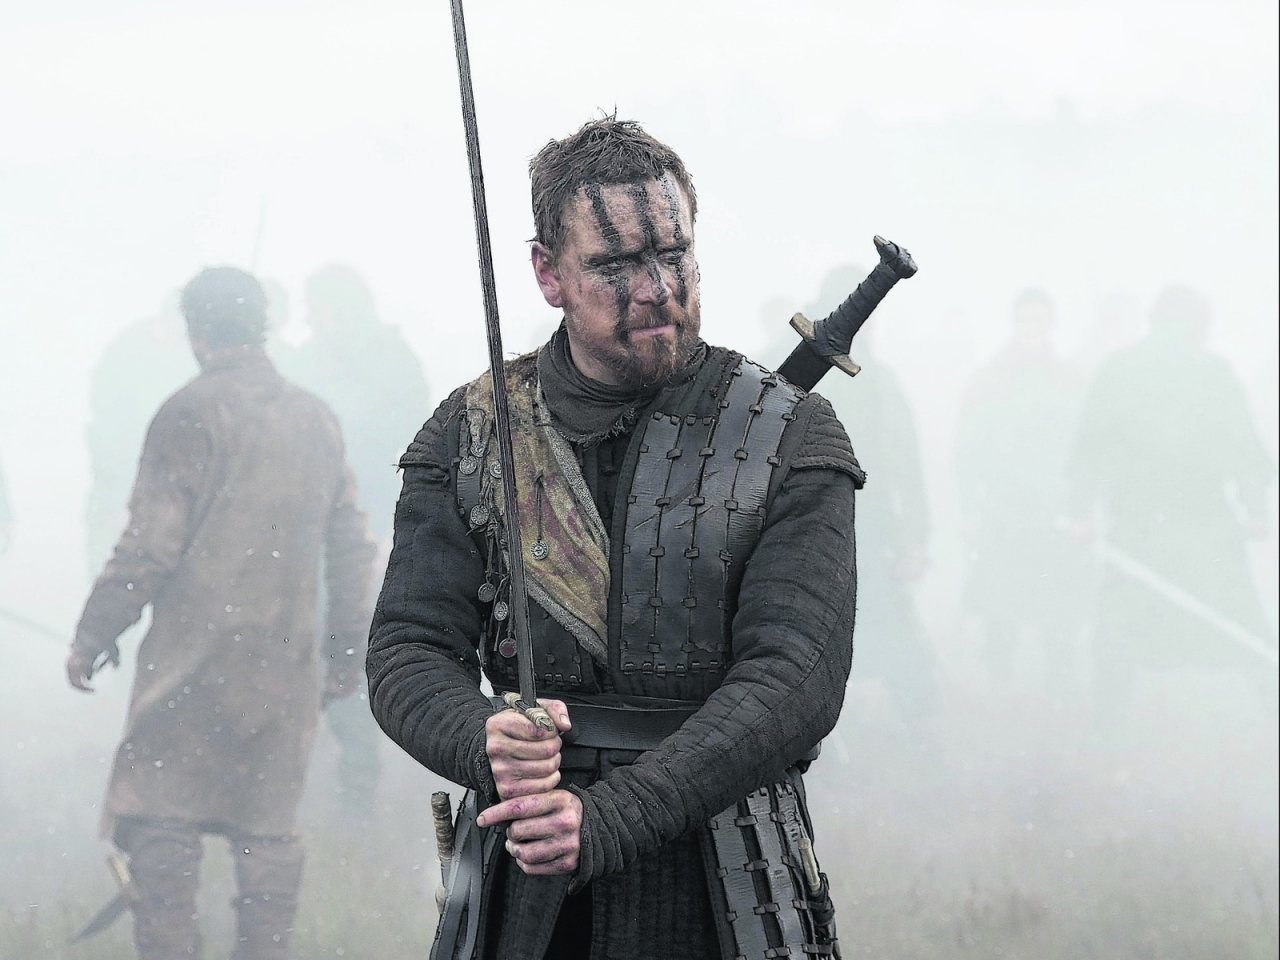 Macbeth in Battle for 1280 x 960 resolution